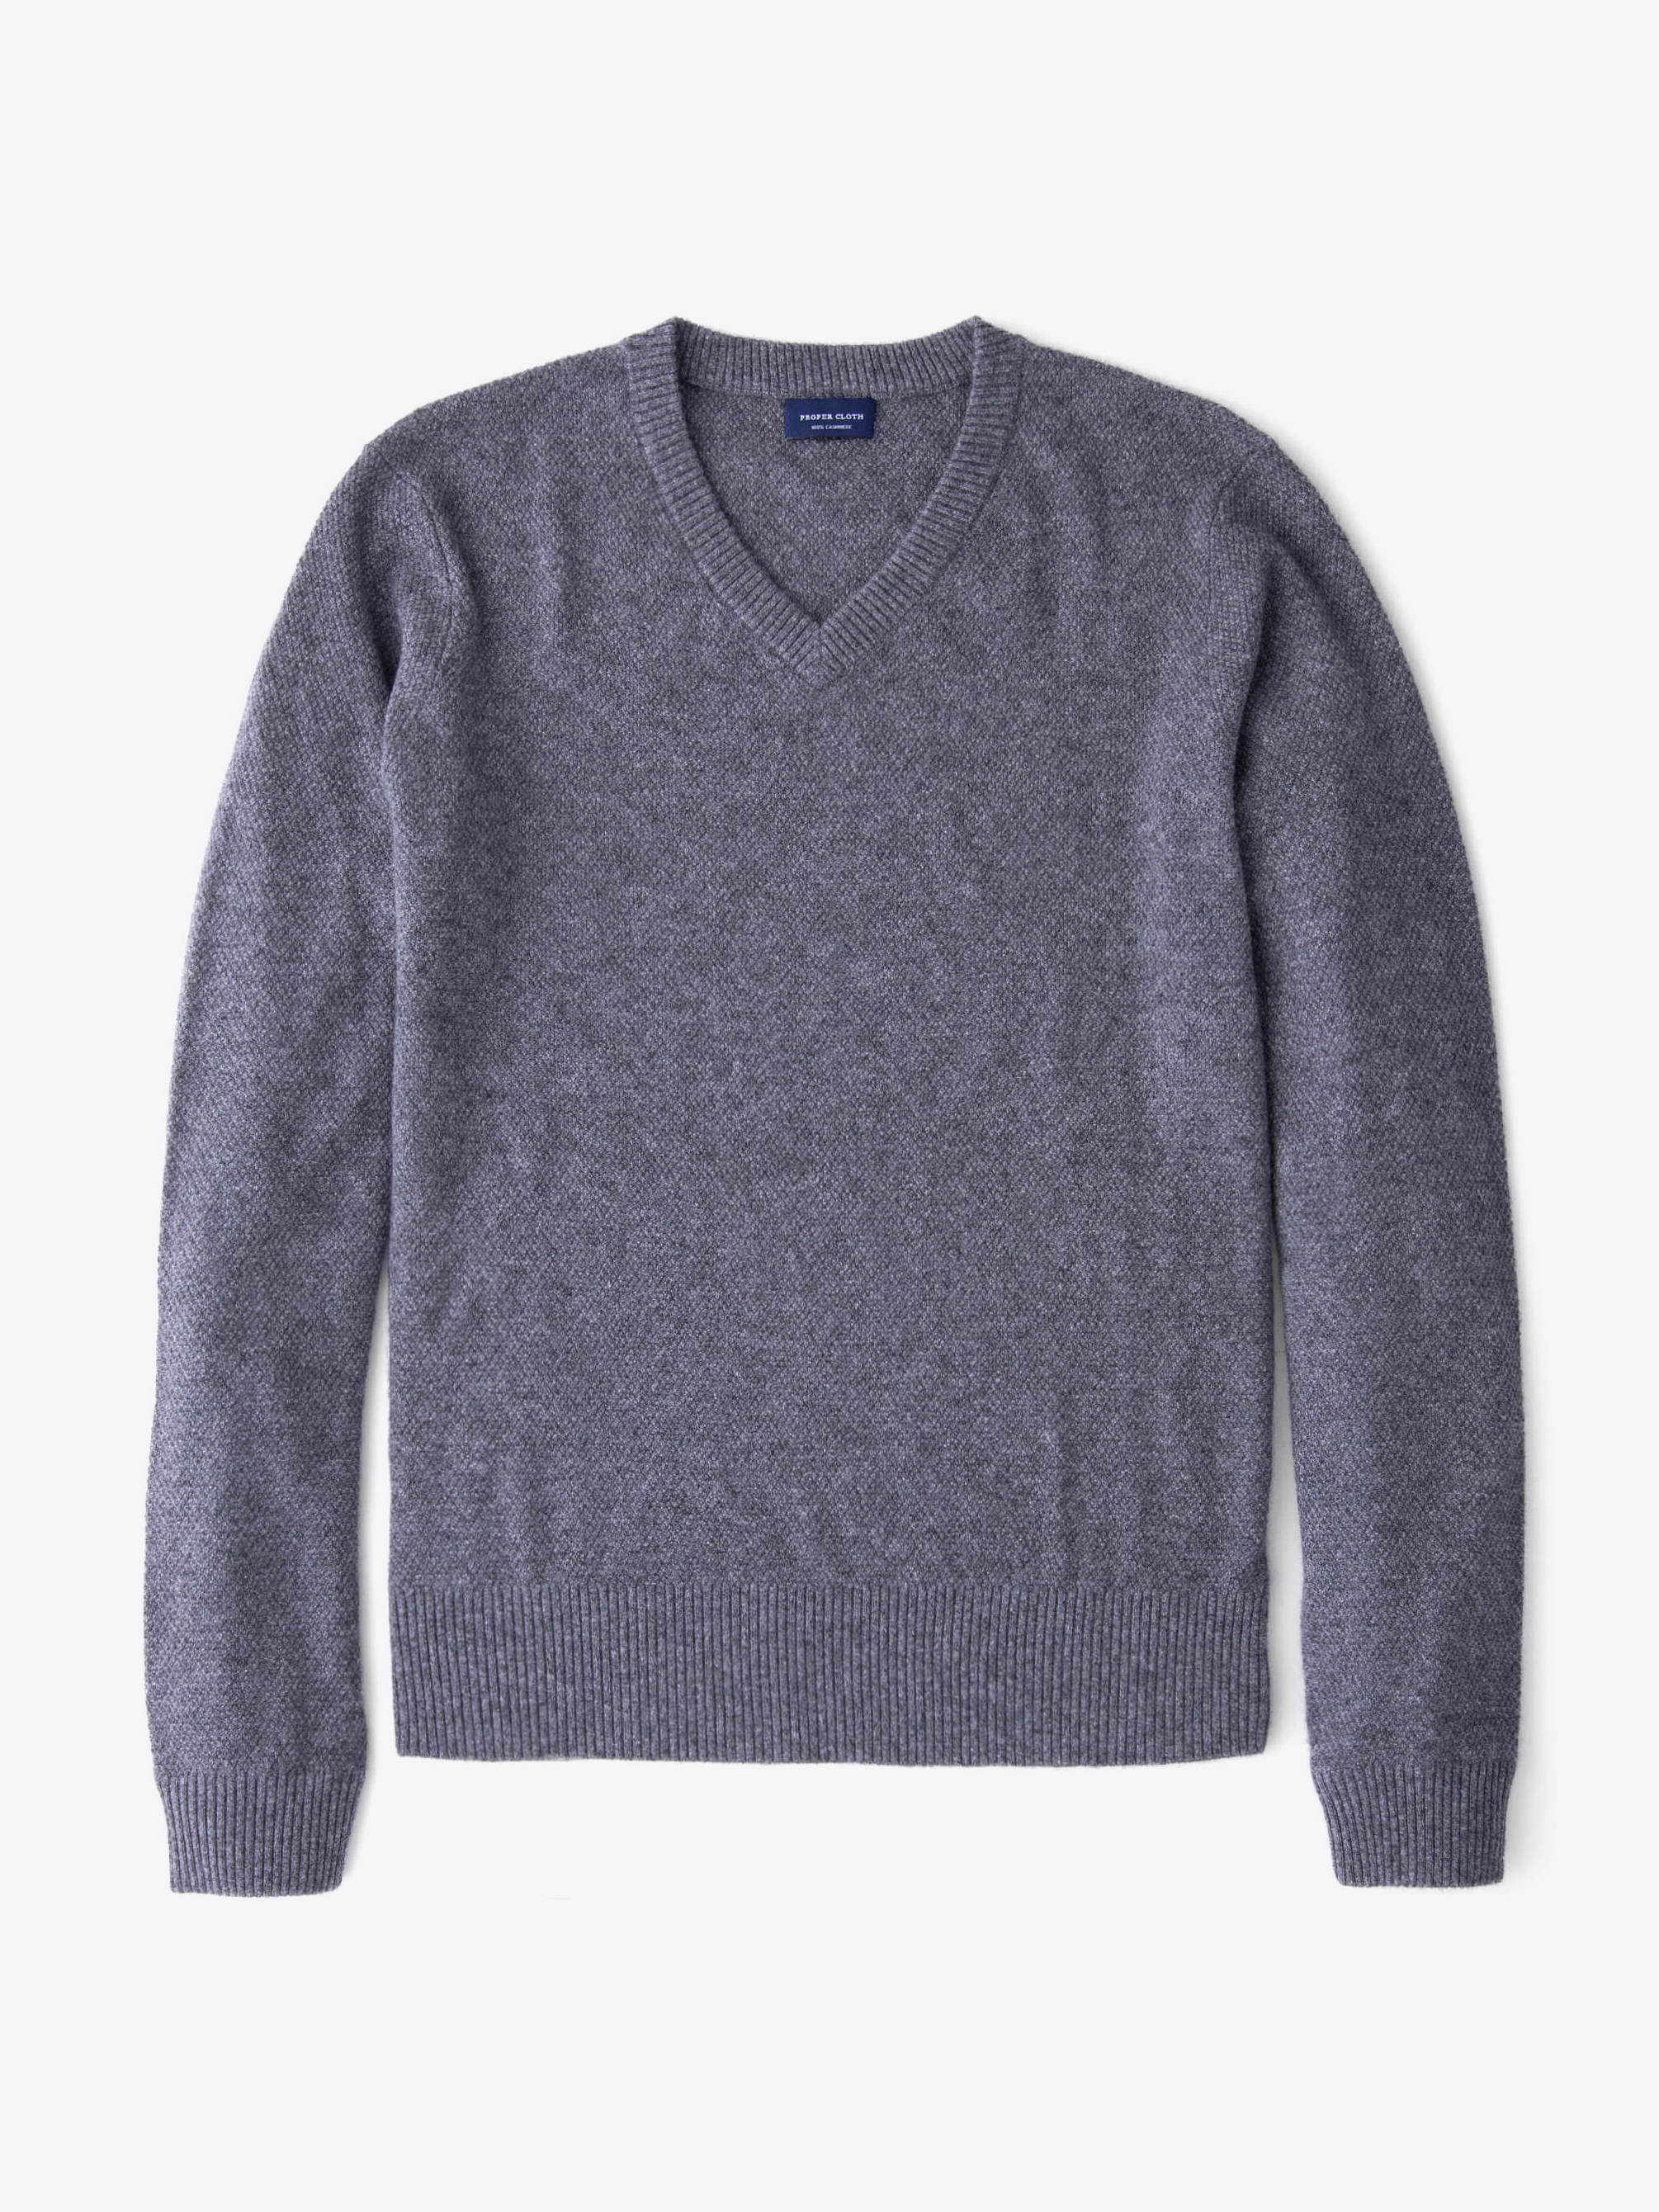 Zoom Image of Grey Cobble Stitch Cashmere V-Neck Sweater